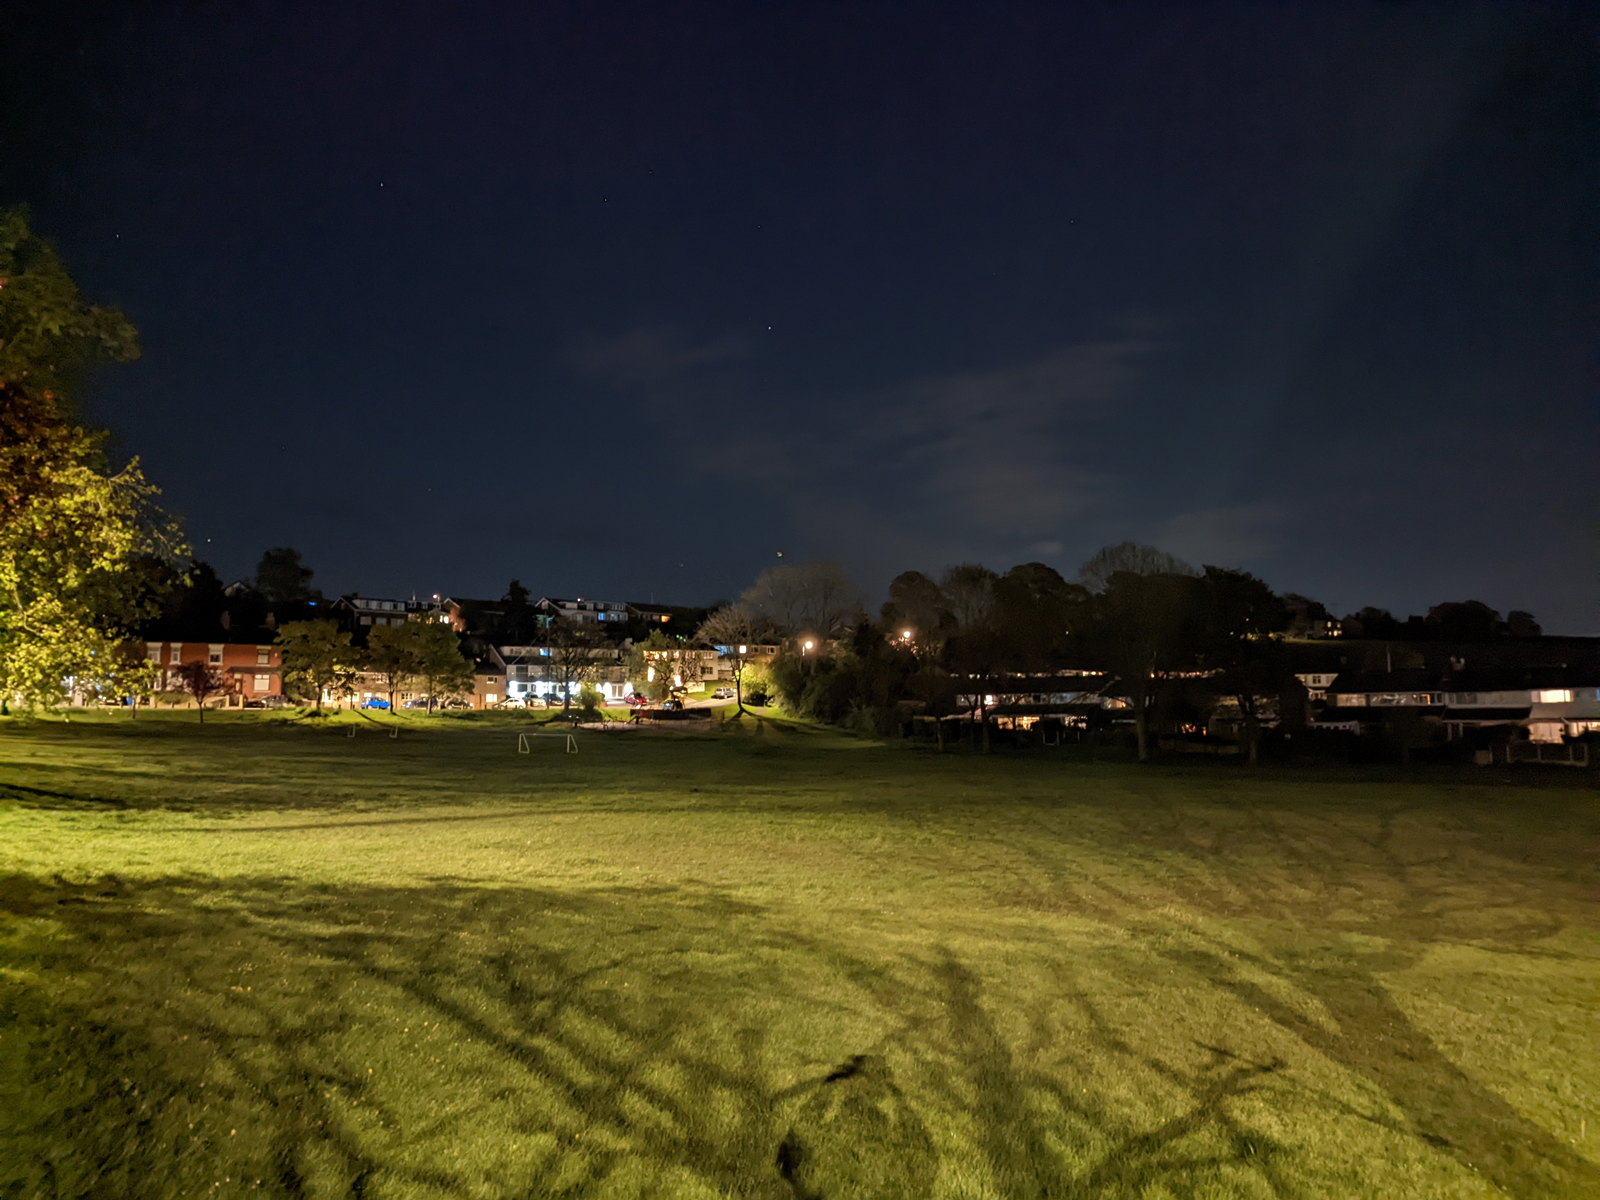 Google Pixel 6 Pro camera sample showing a park at night